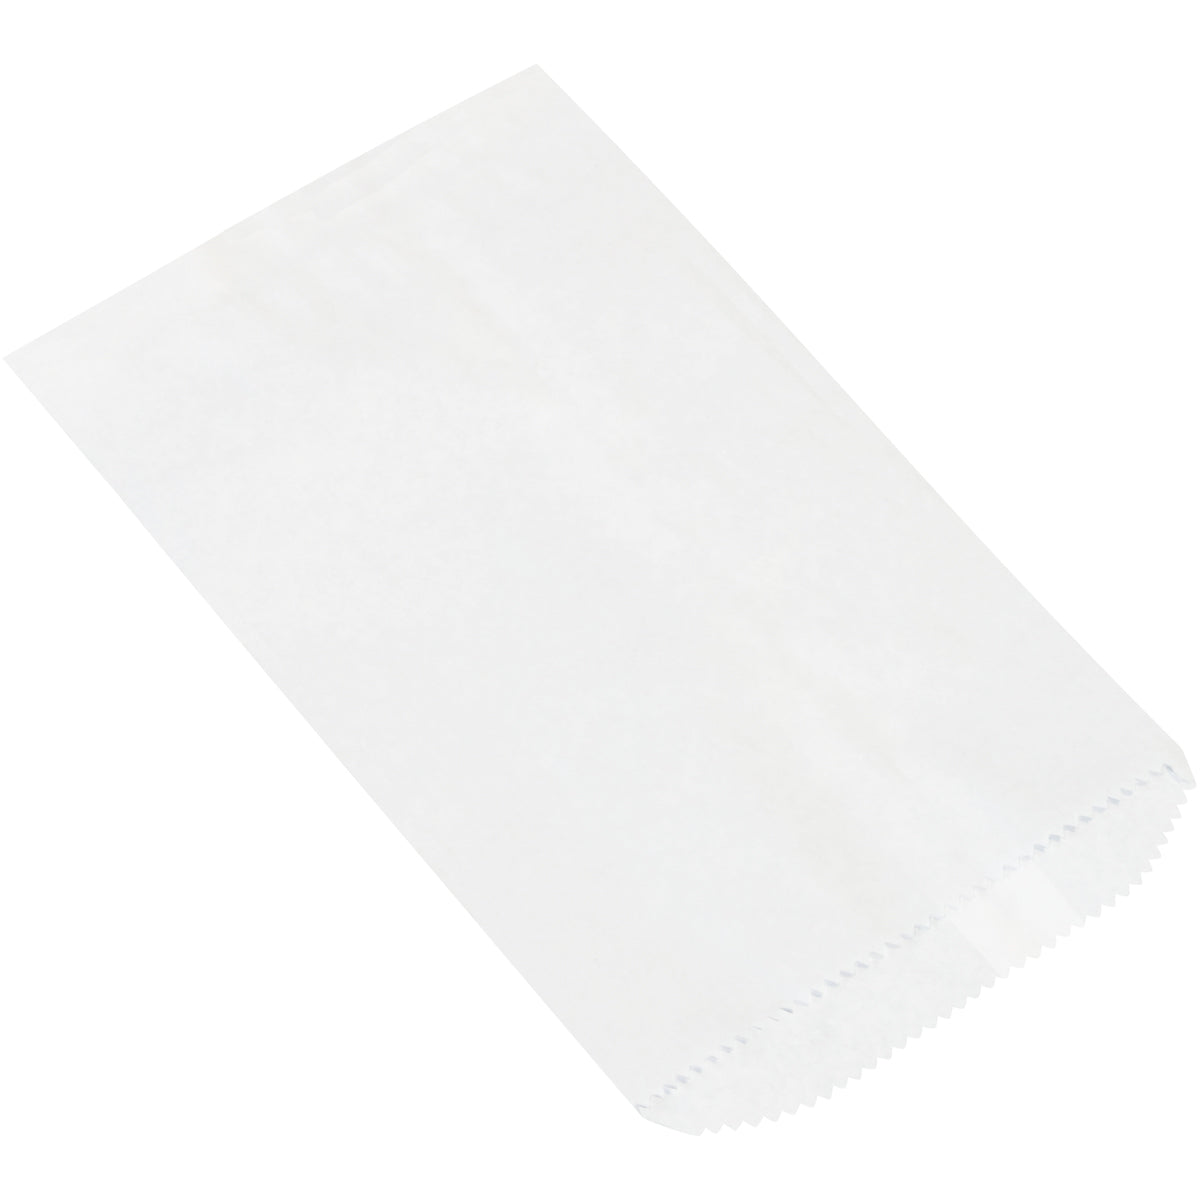 6 1/4 x 9 1/4 White Flat Merchandise Bags 3000/Case